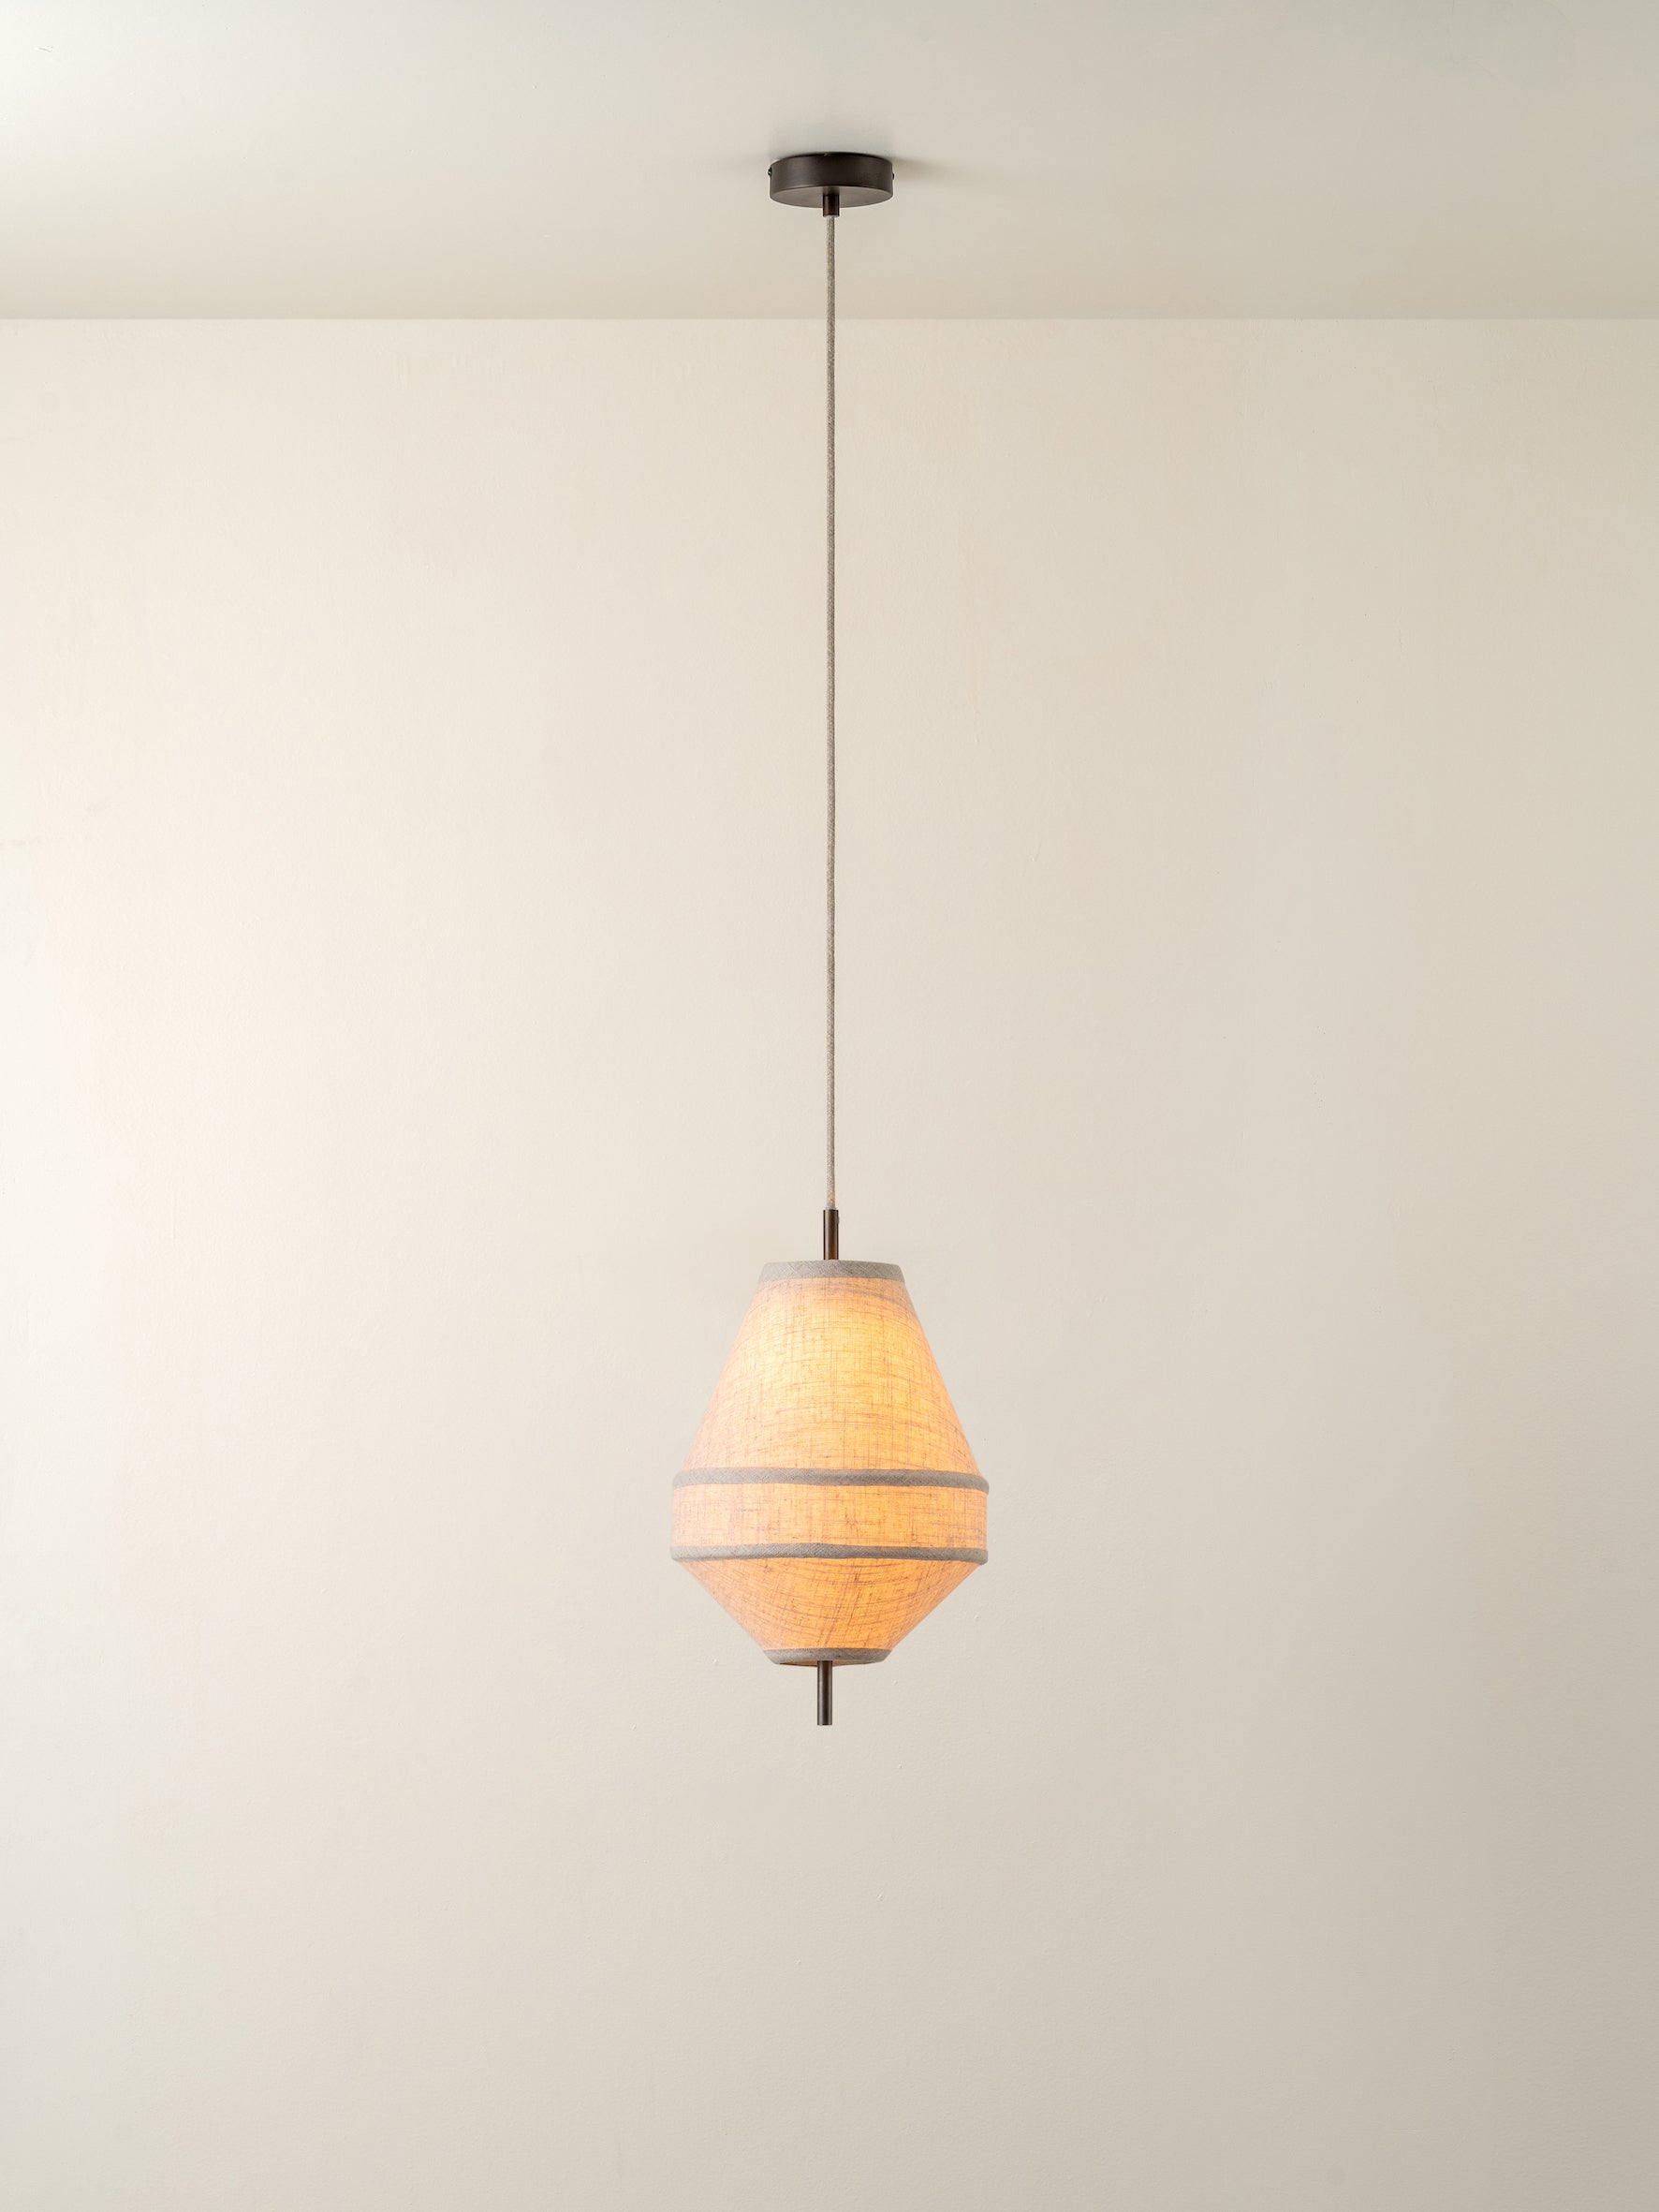 Solara - small aged brass and layered natural linen pendant | Ceiling Light | Lights & Lamps | UK | Modern Affordable Designer Lighting